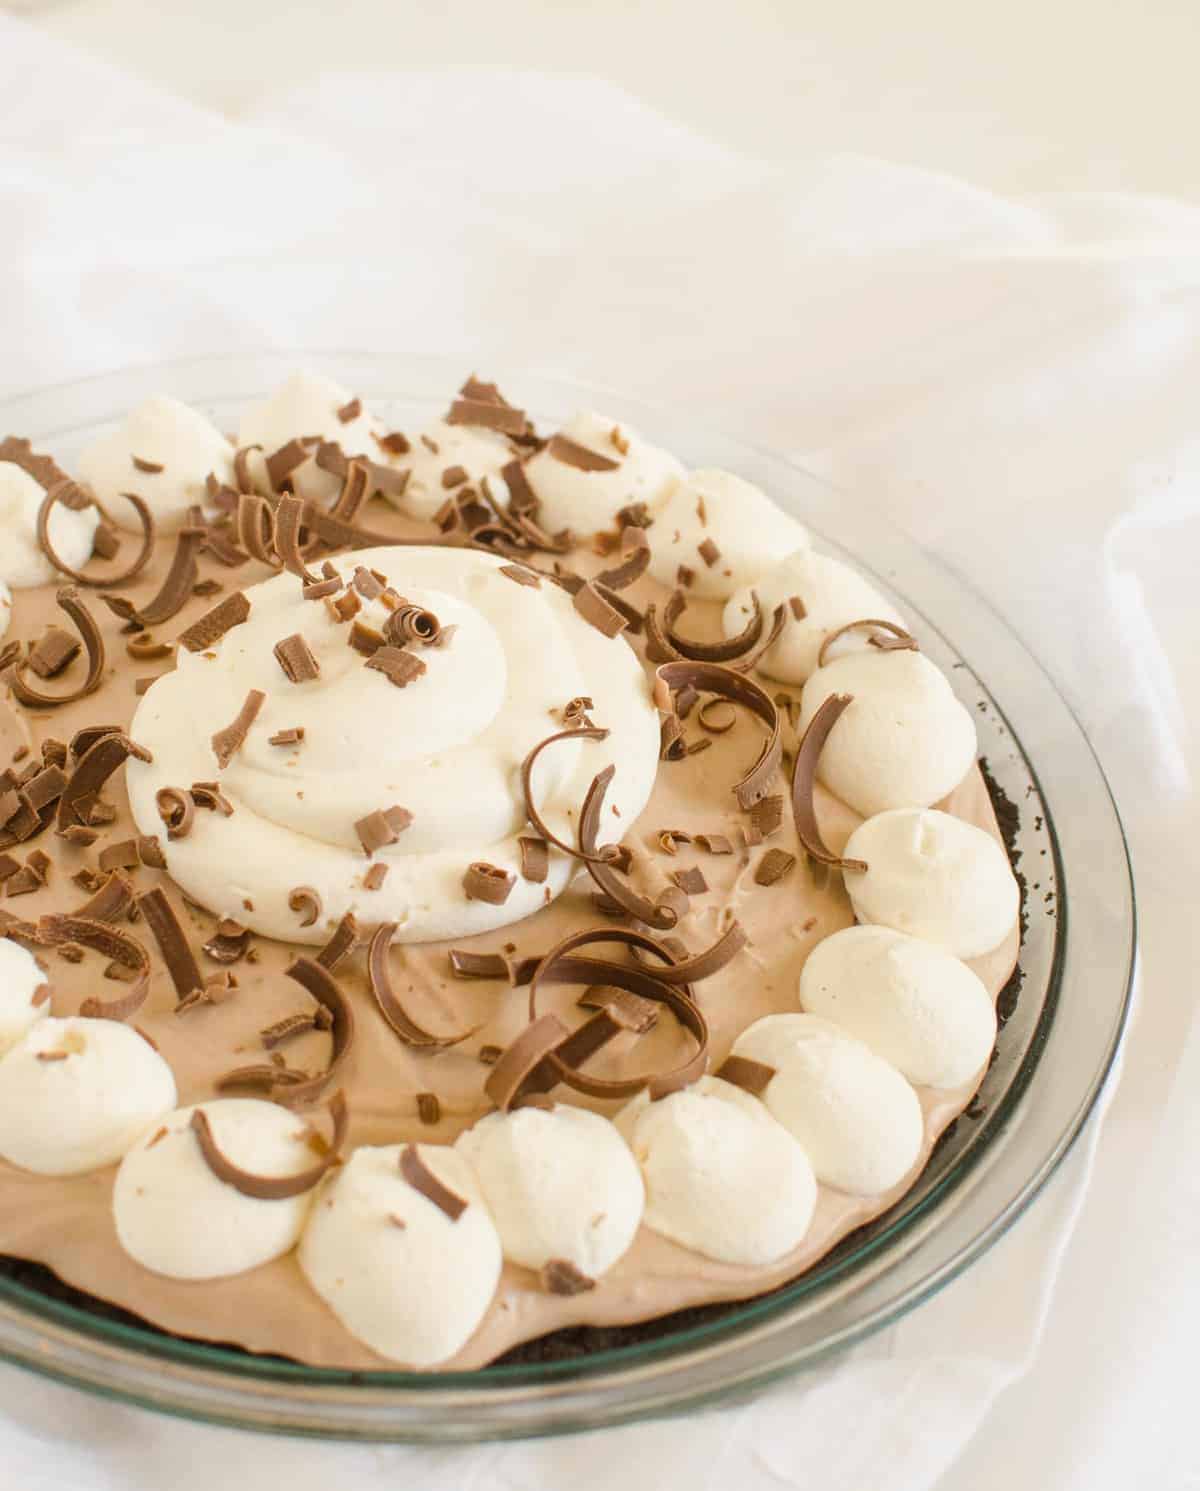 Homemade Chocolate Cream Pie made with dark chocolate, fresh cream, and an Oreo cookie crust. 